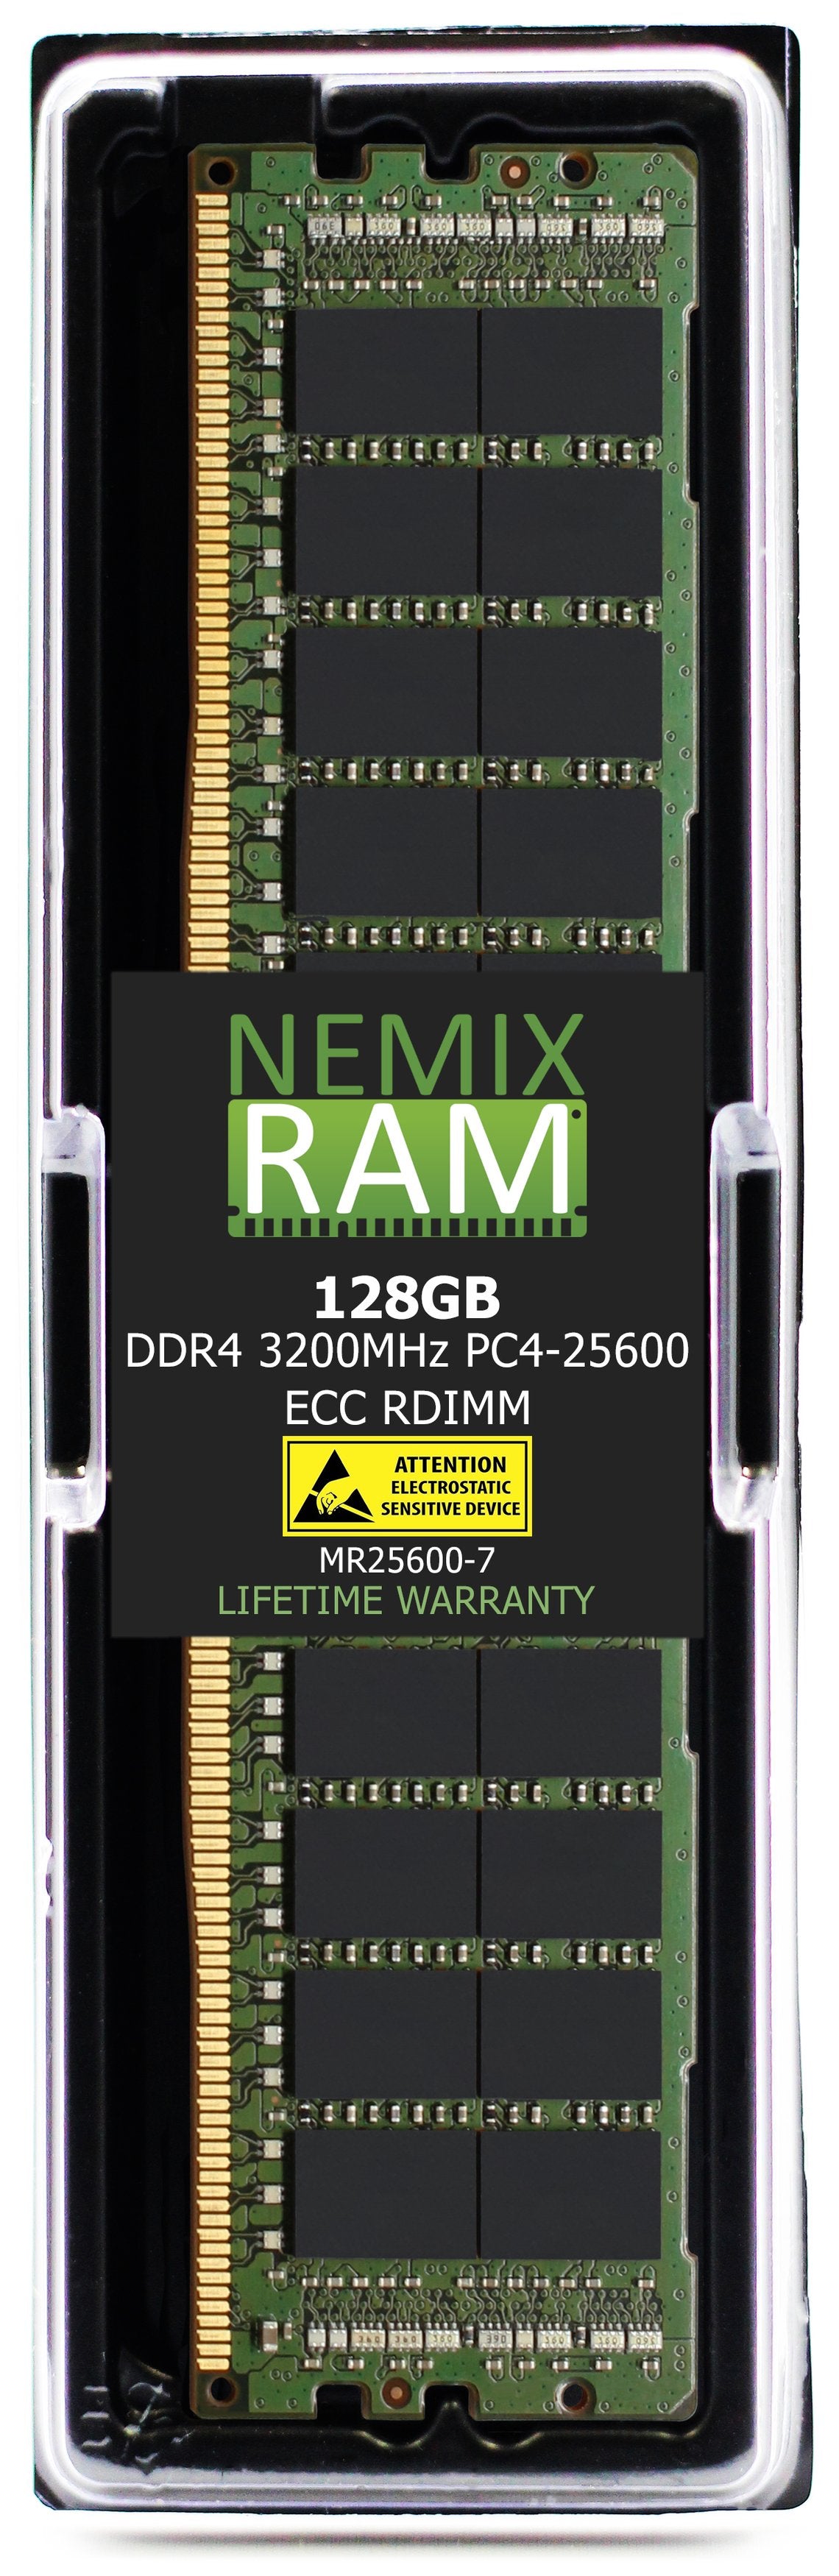 128GB DDR4 3200MHZ PC4-25600 RDIMM Compatible with Supermicro MEM-DR412L-SL01-ER32